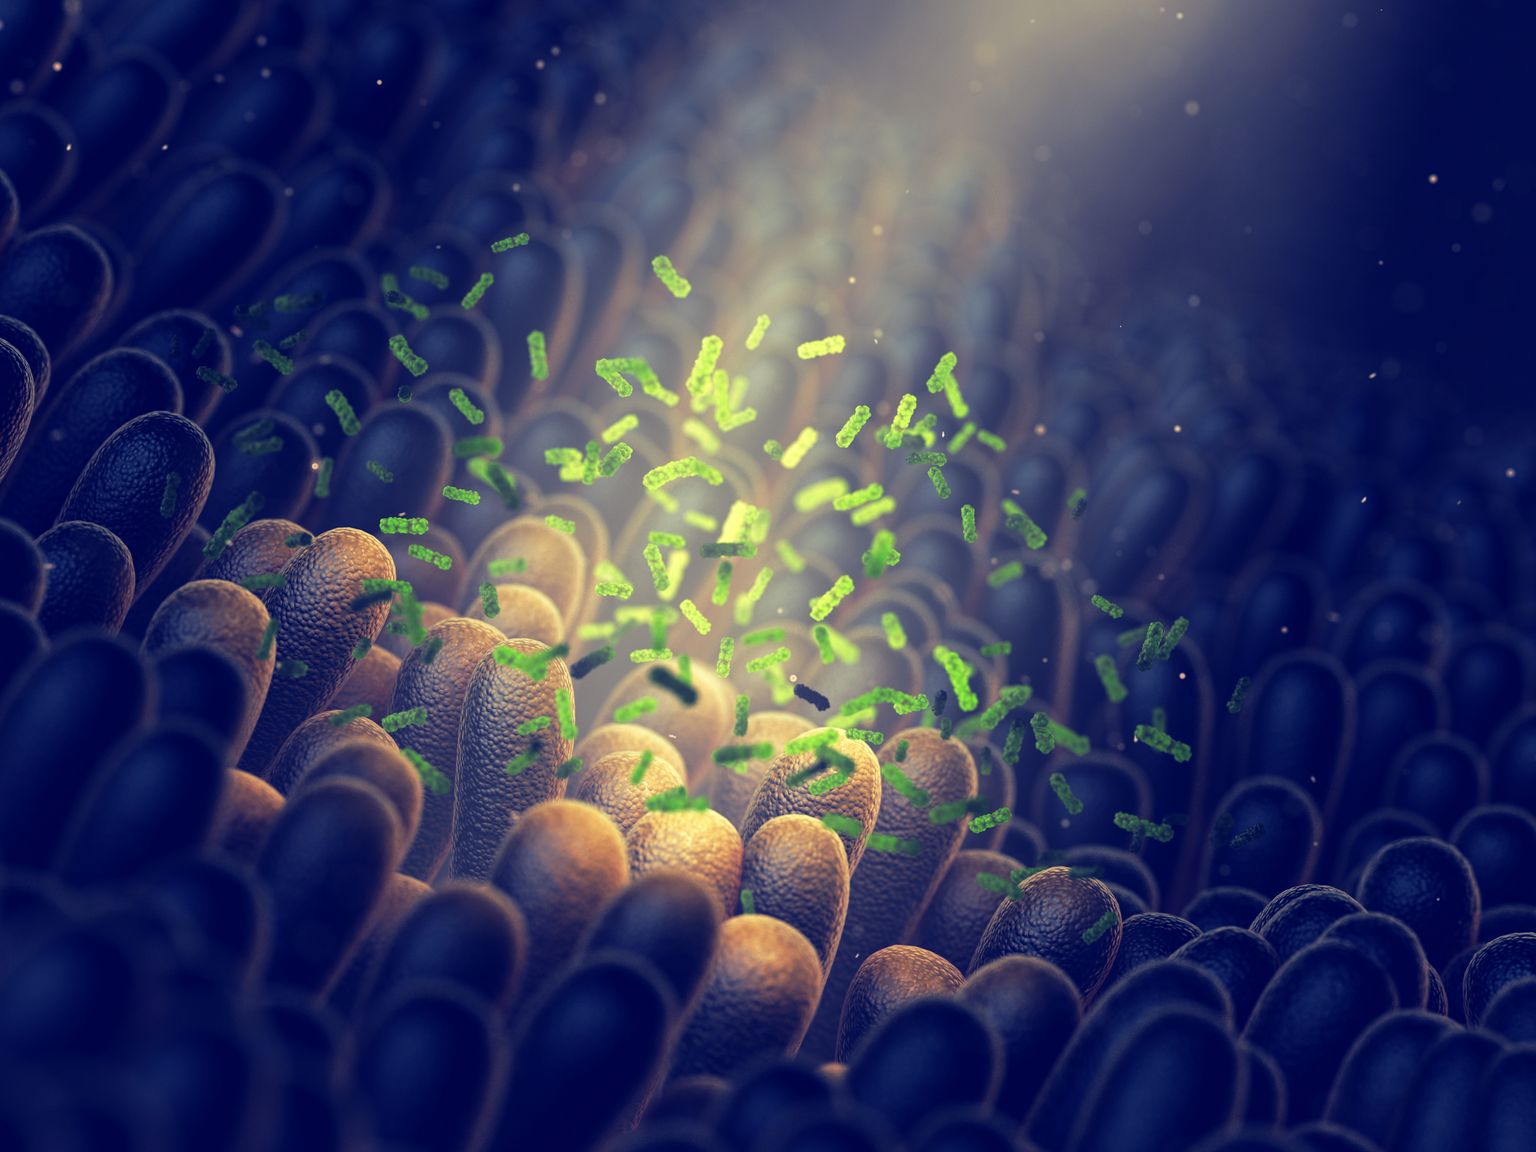 batteri intestinali, salute della flora intestinale, imaging 3D